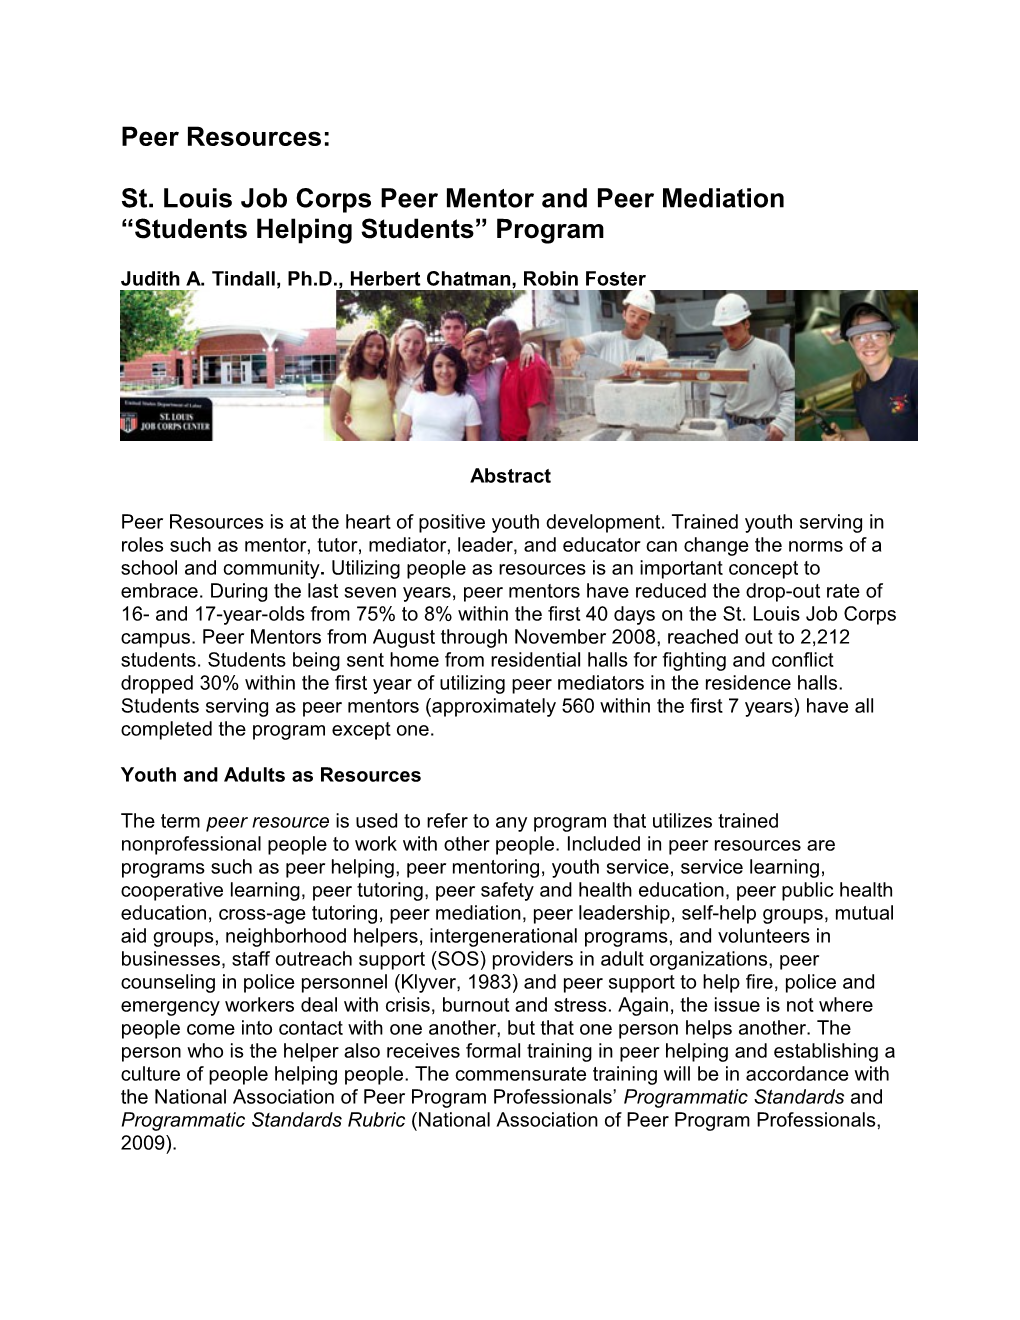 St. Louis Job Corps Peer Mentor and Peer Mediation Students Helping Students Program